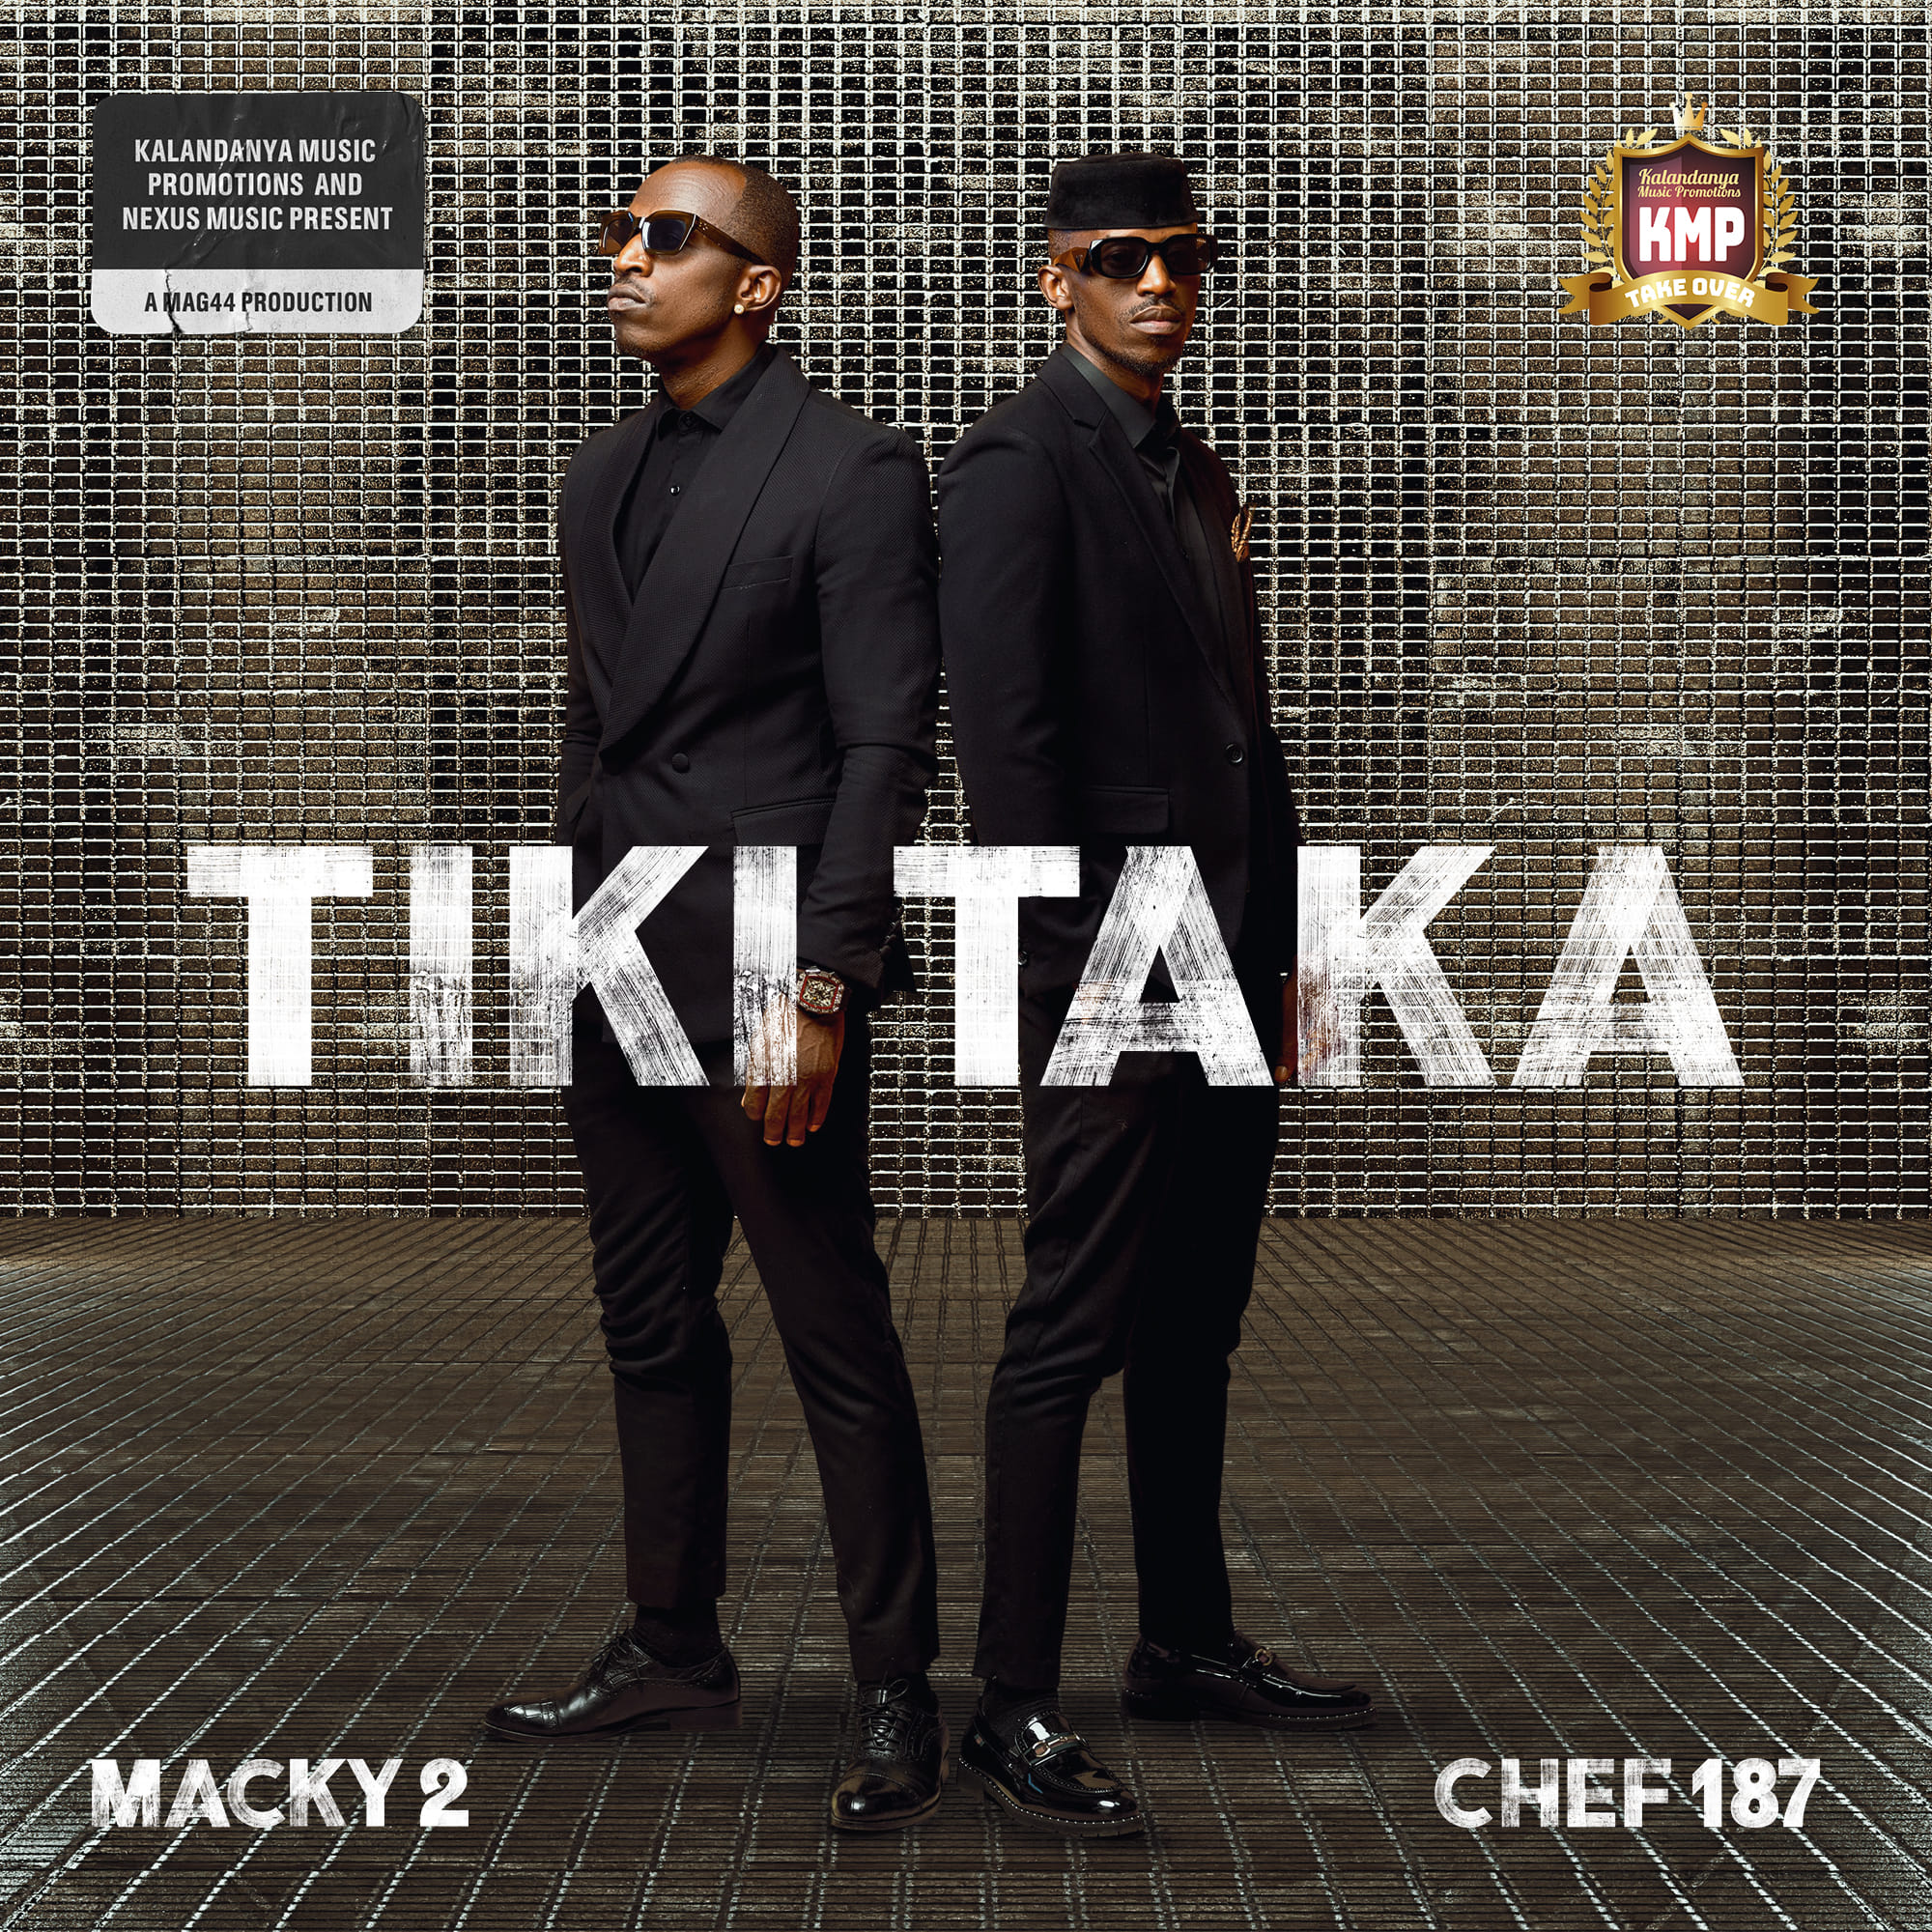 Macky 2 x Chef 187 - Tiki Taka